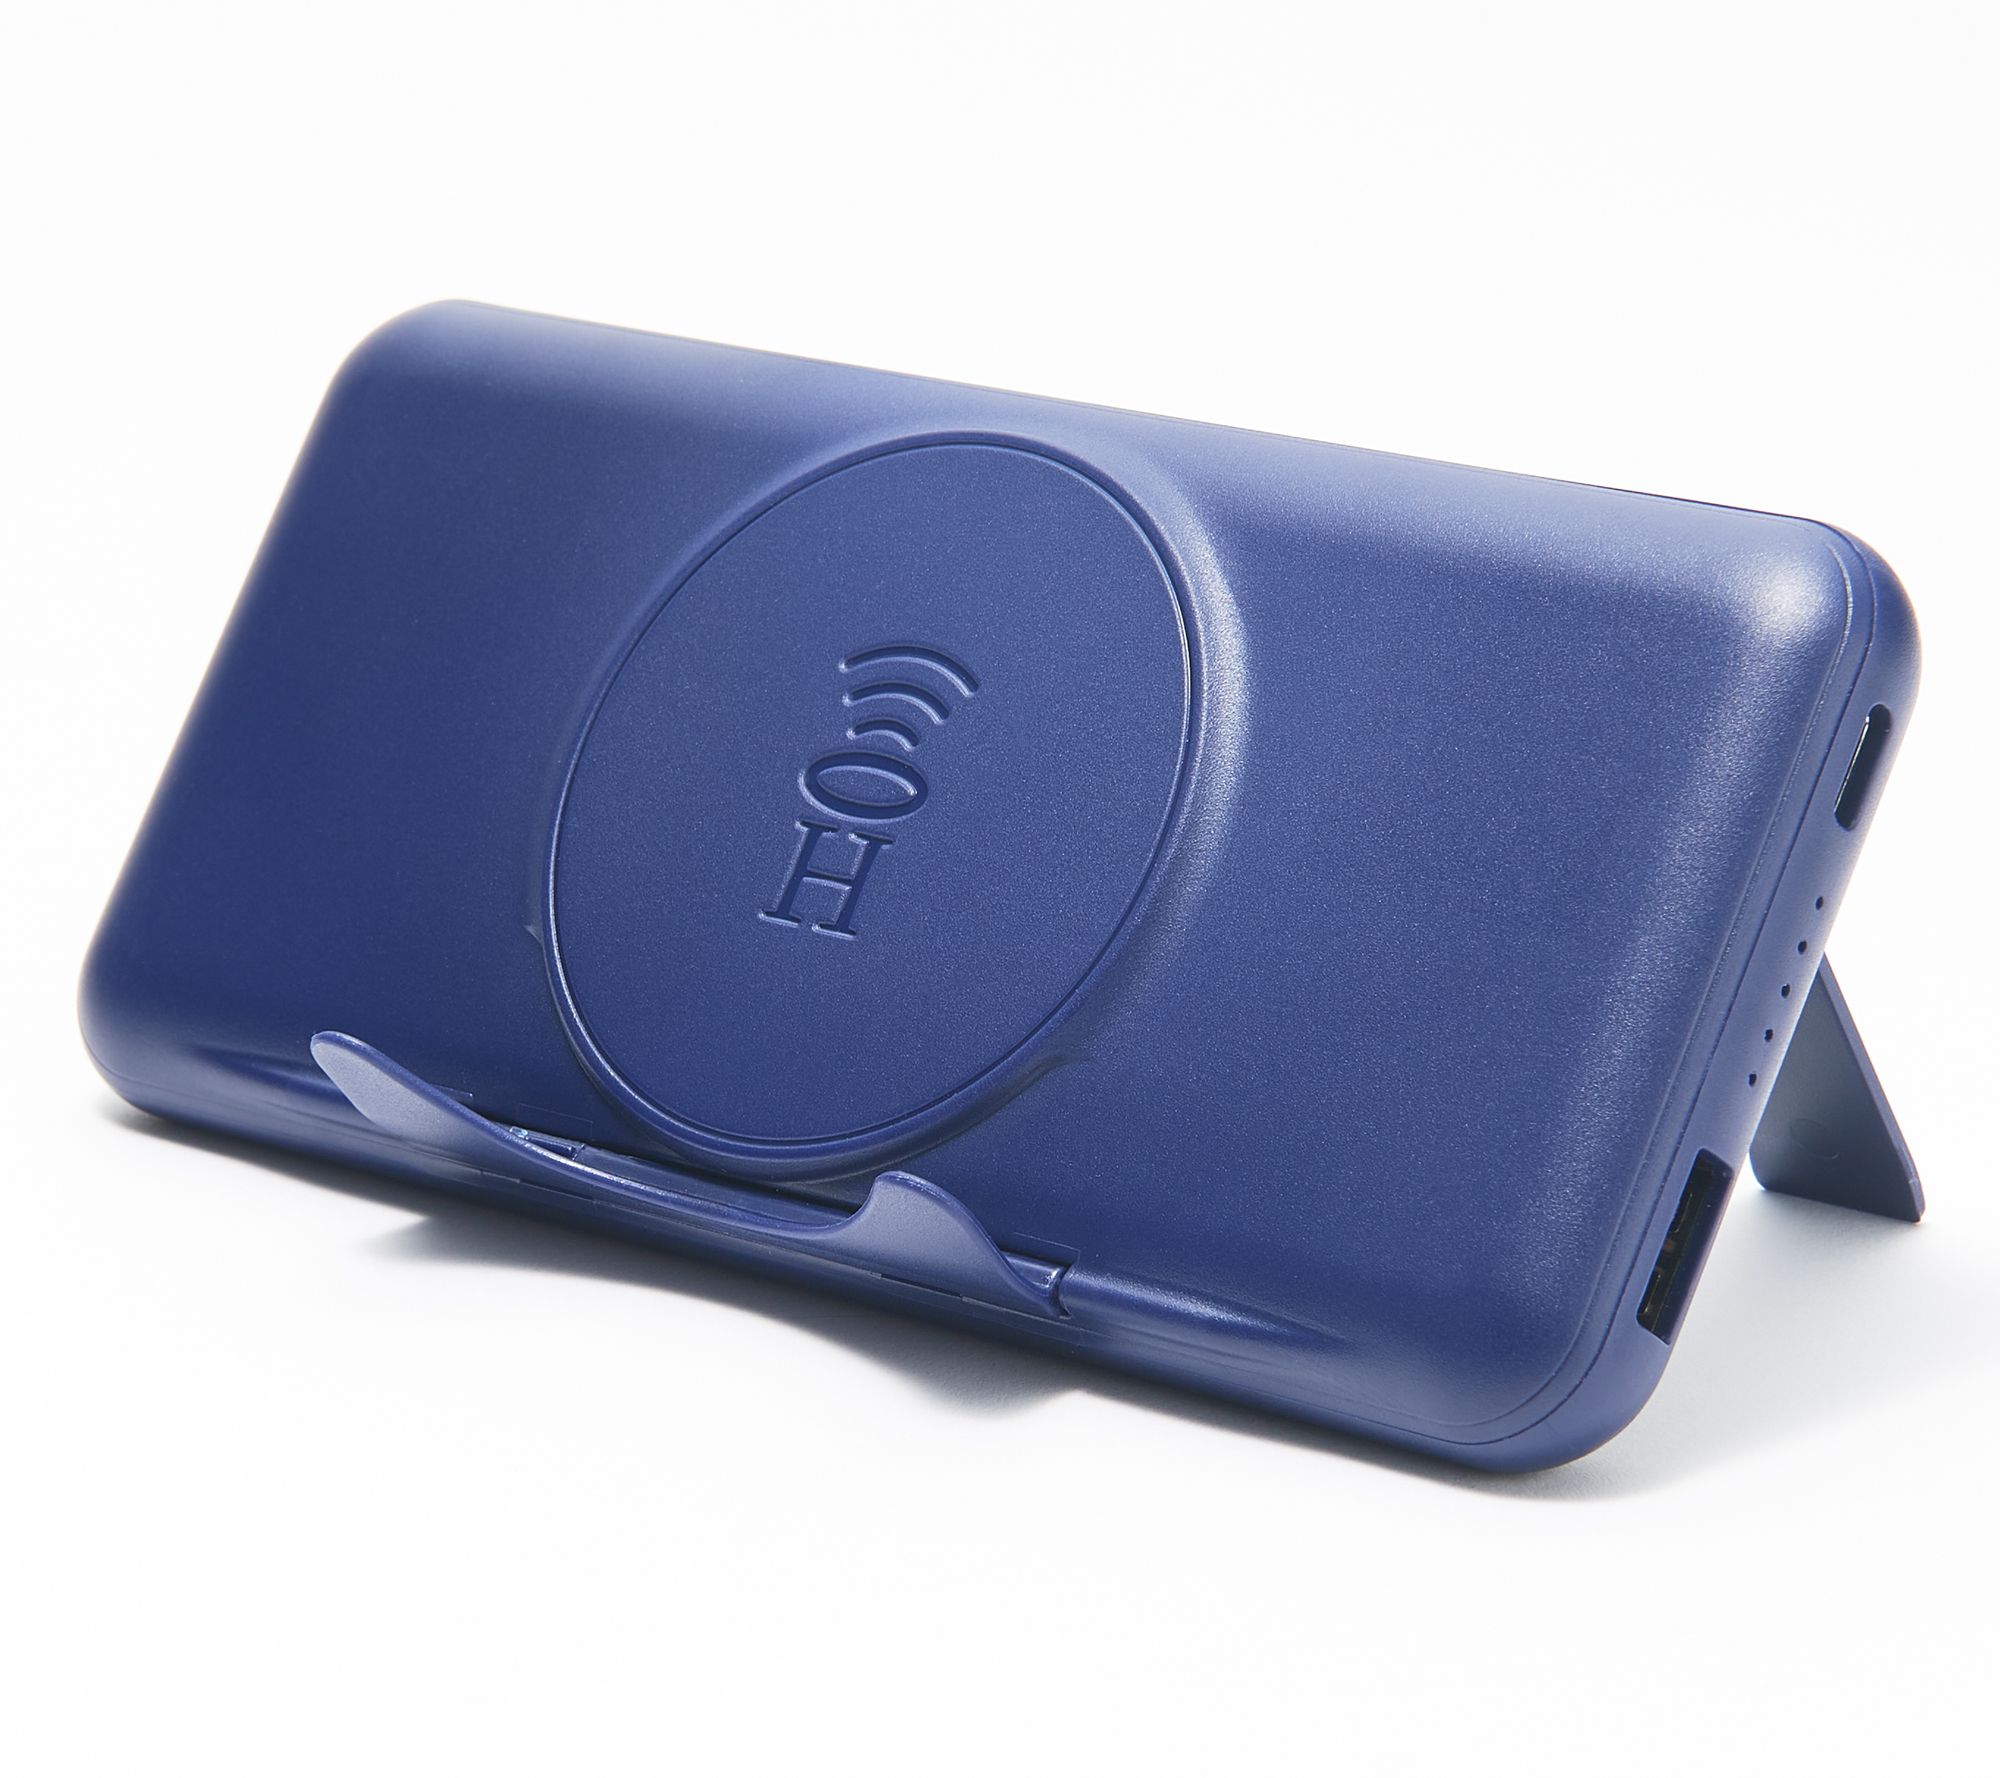 Wireless Portable Charger - Kickstand, Digital Display